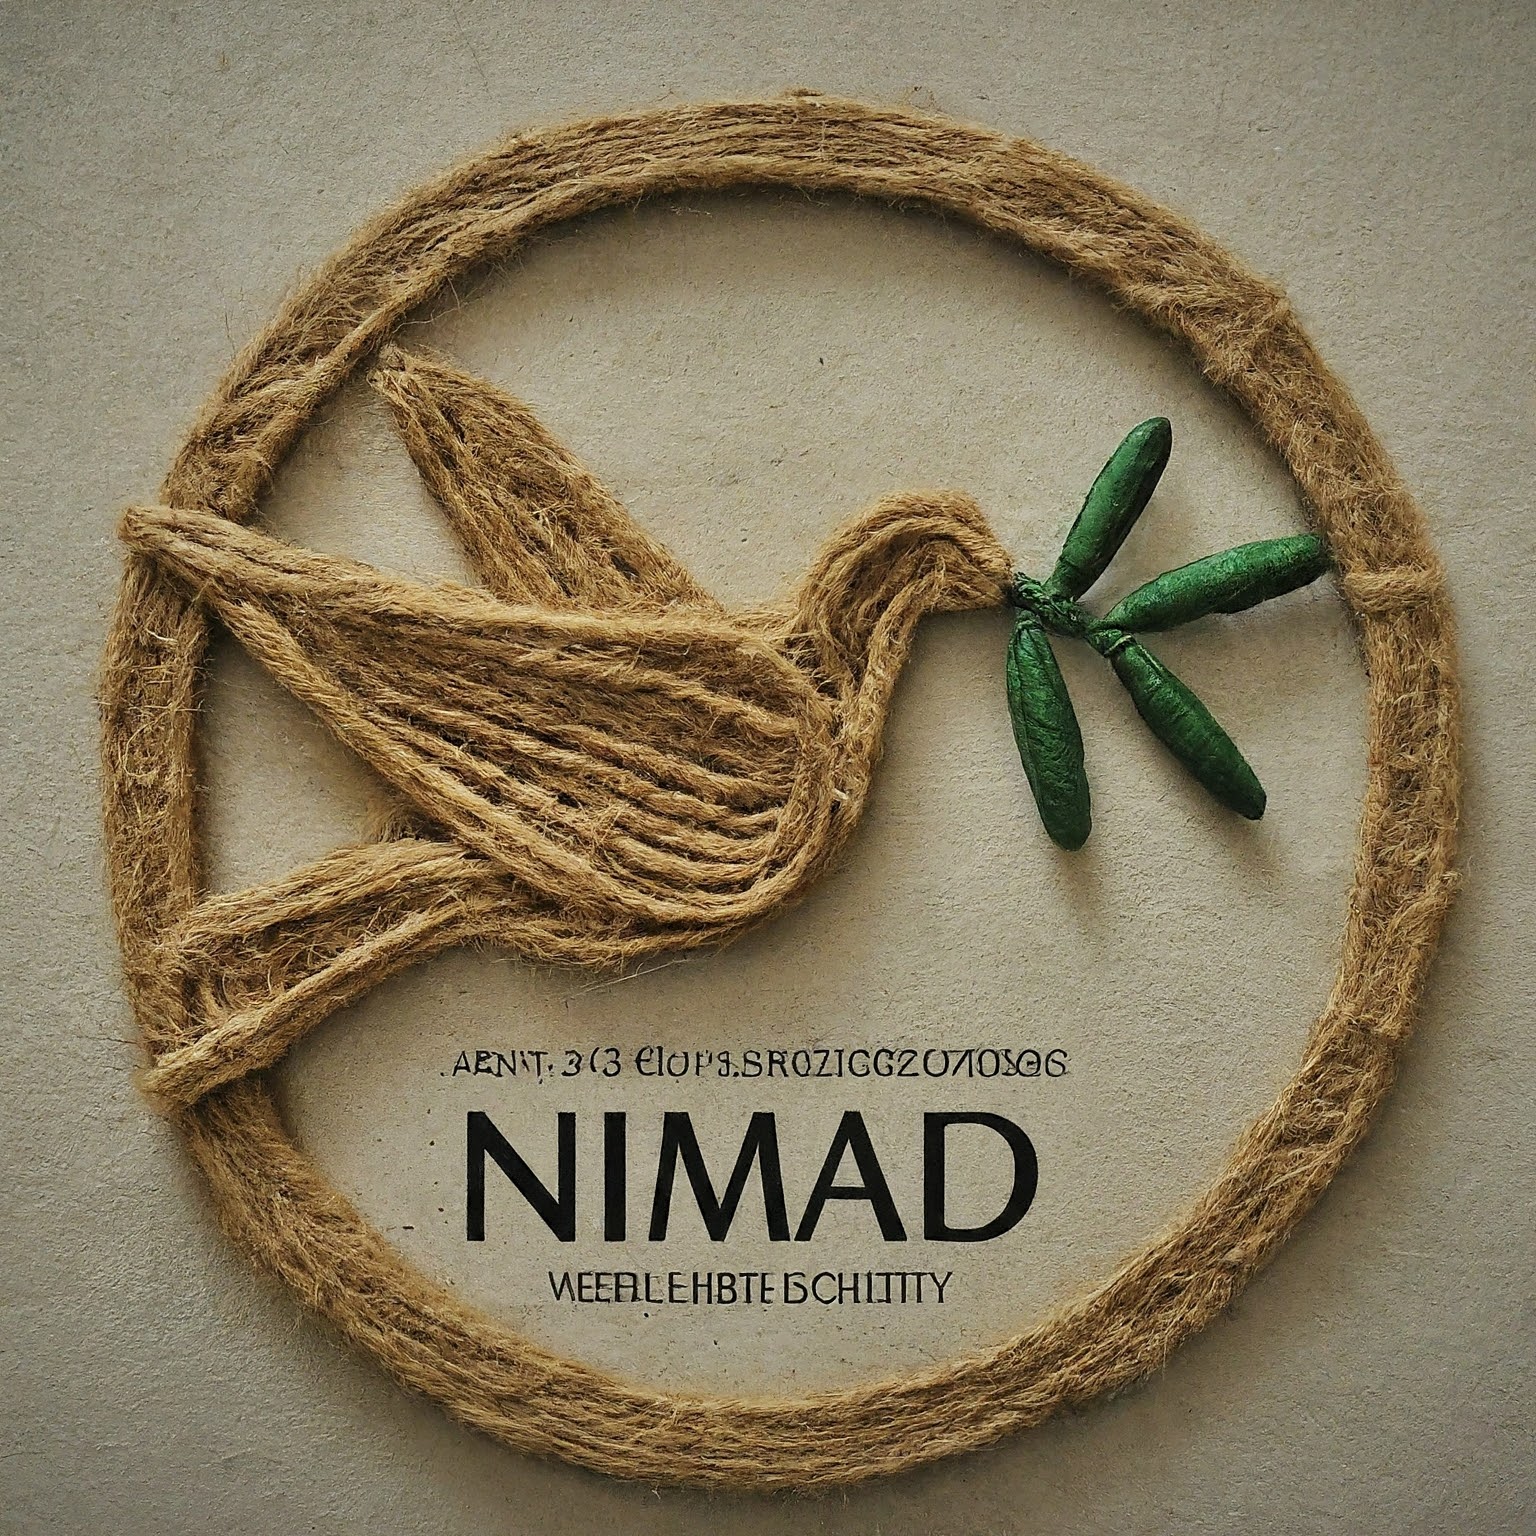 Nimad Art and Cultural Development Welfare Society (NJC)